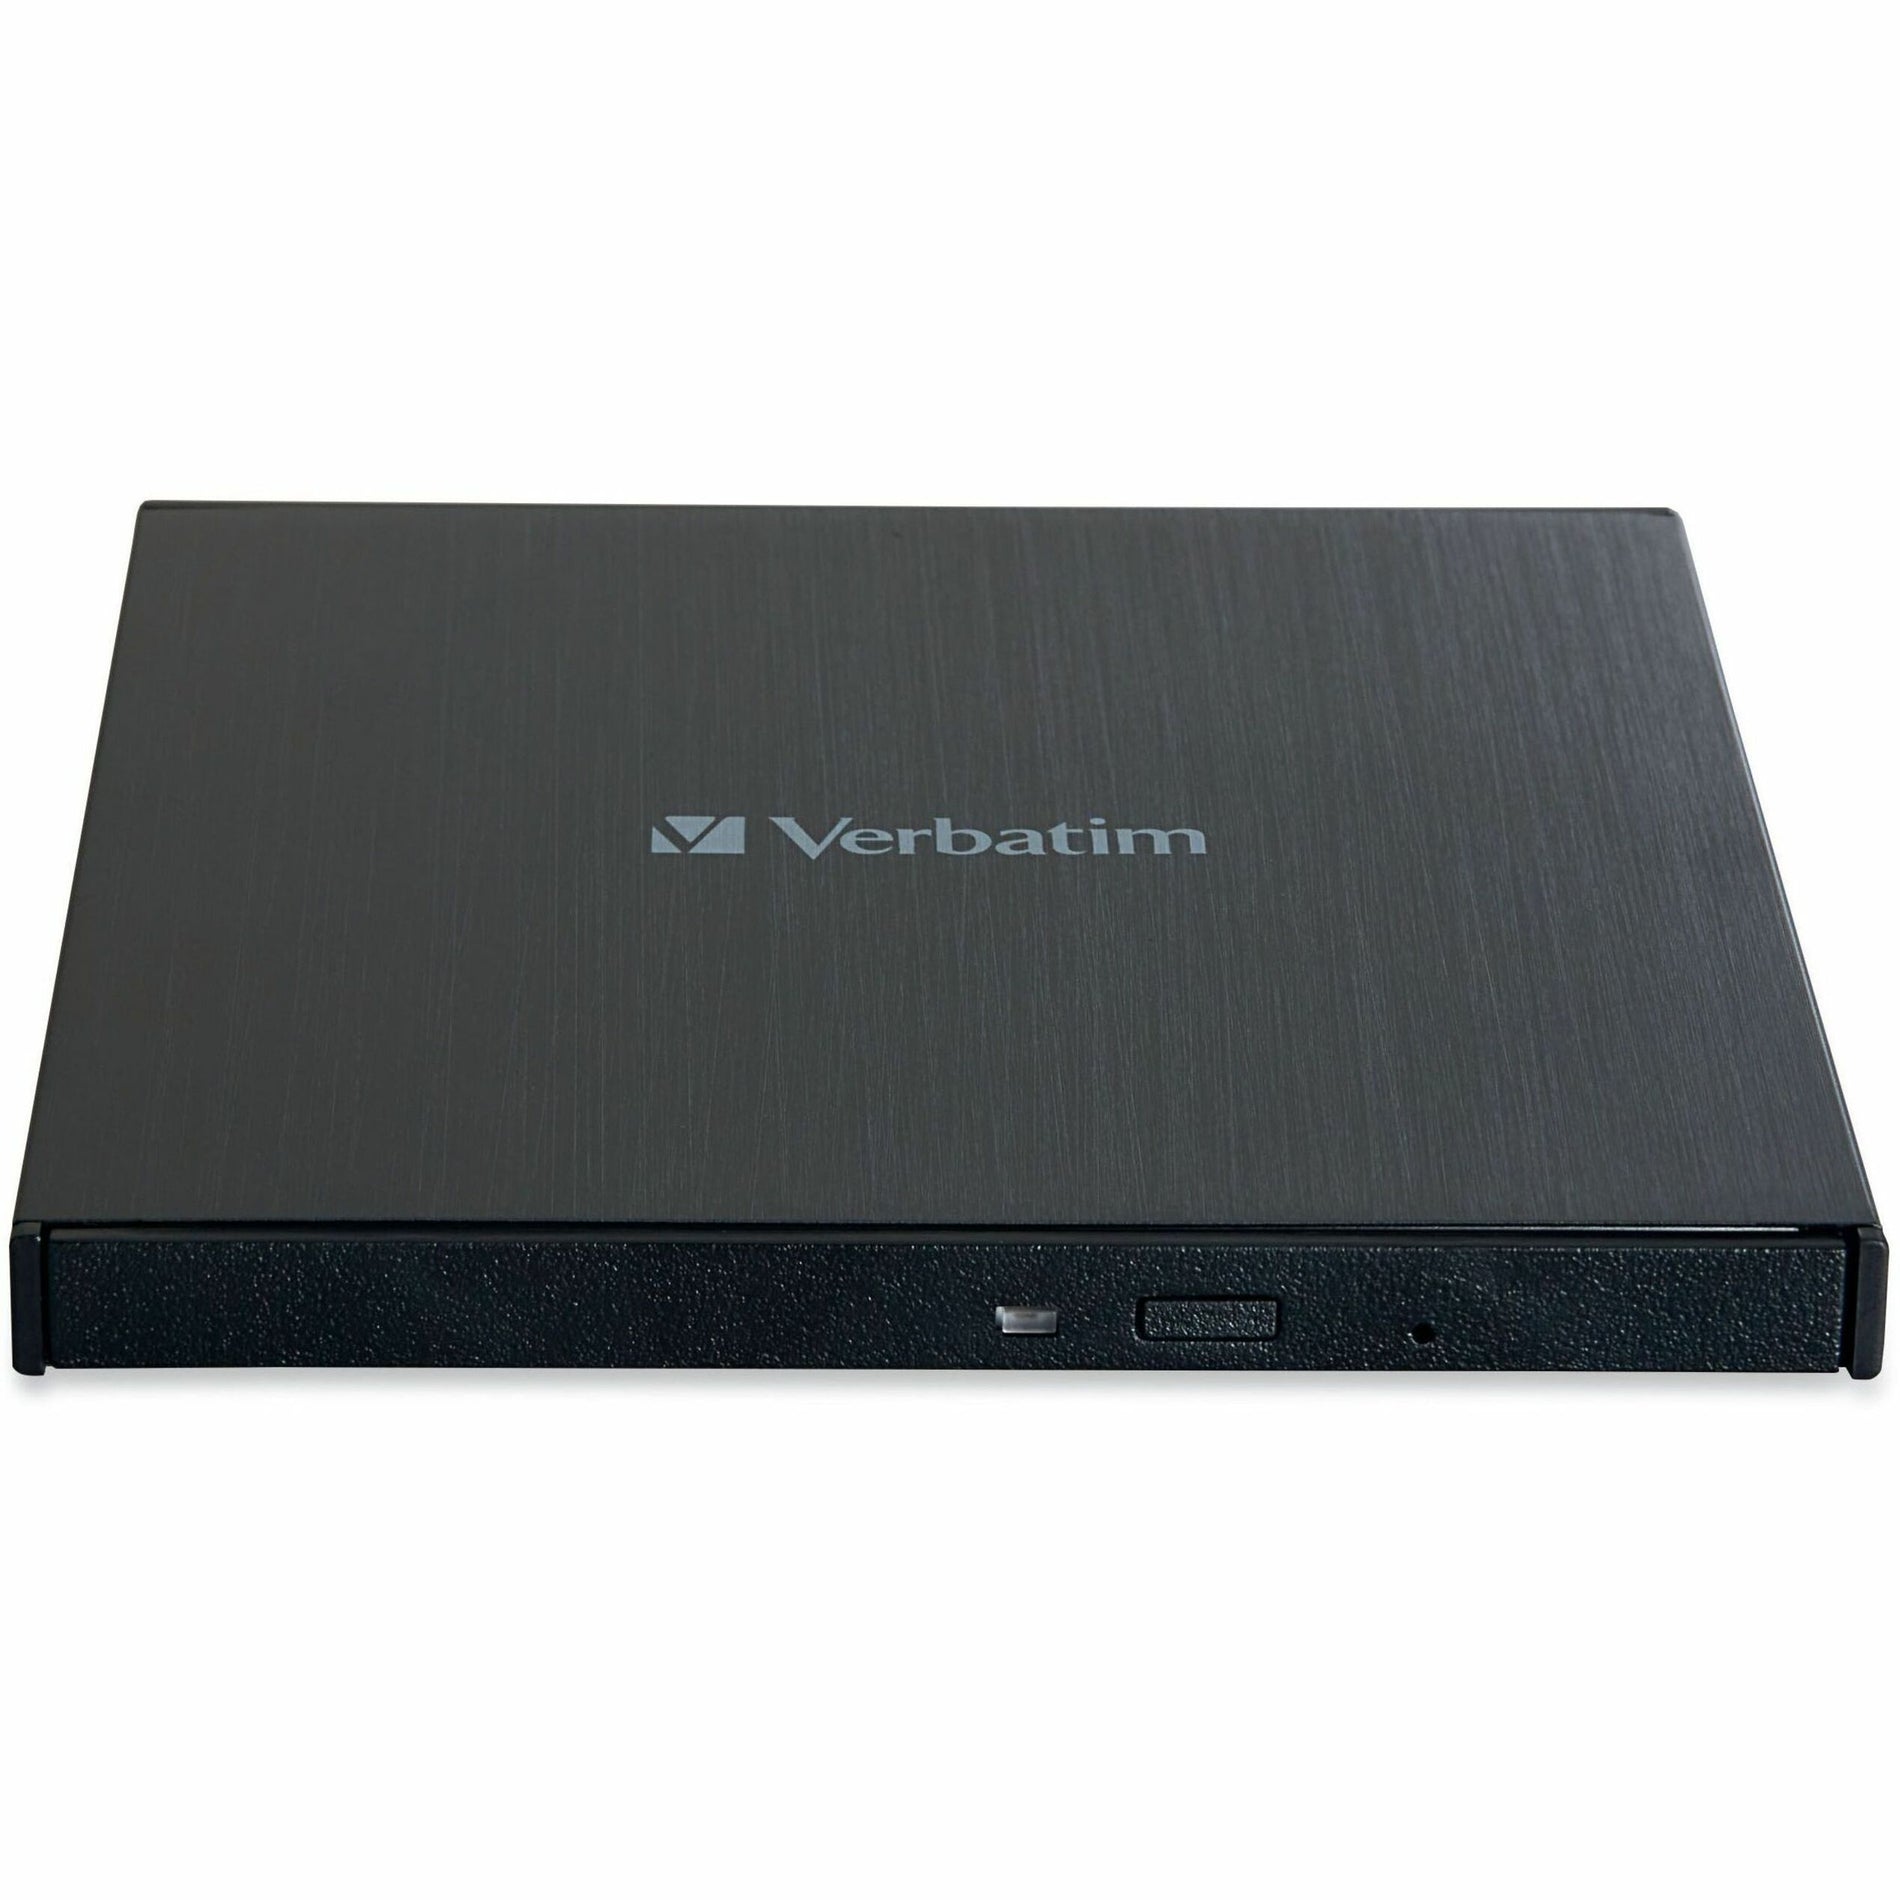 Verbatim 43890 External Slimline Blu-ray Writer, USB 3.2 Gen 1, 6x BD Write Speed